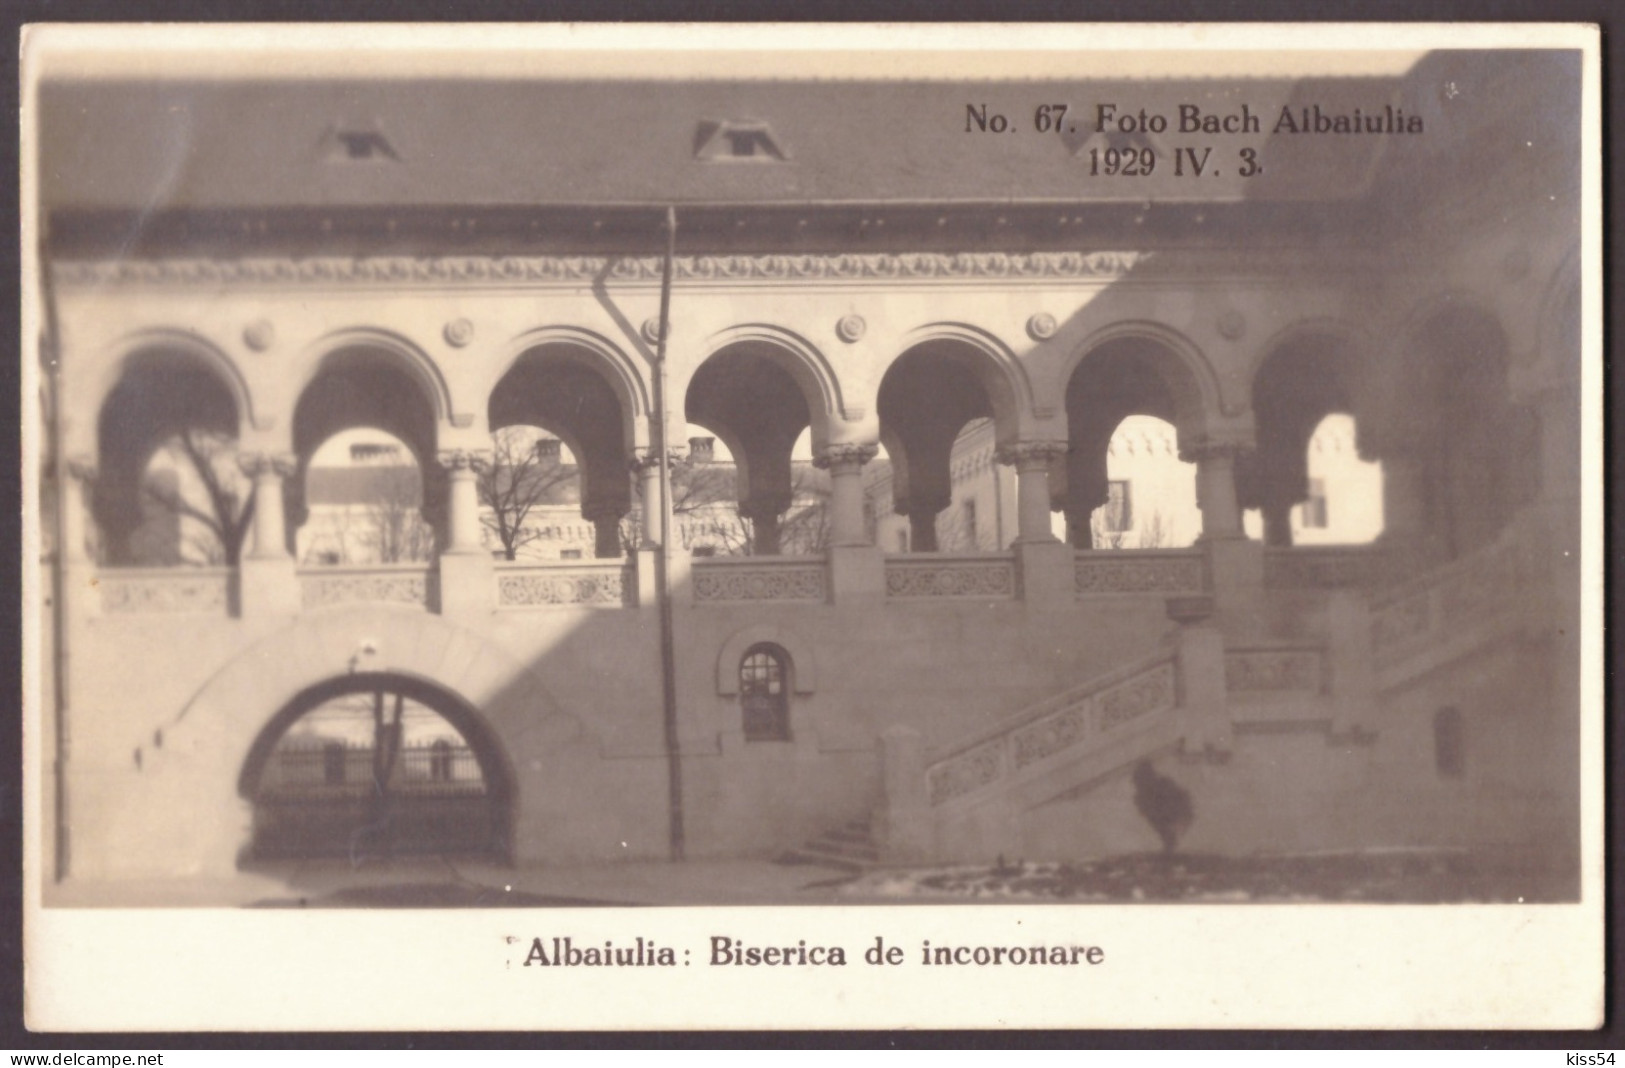 RO 38 - 24899 ALBA-IULIA, Biserica Incoronarii, Romania - Old Postcard, Real Photo - Used - 1929 - Roumanie